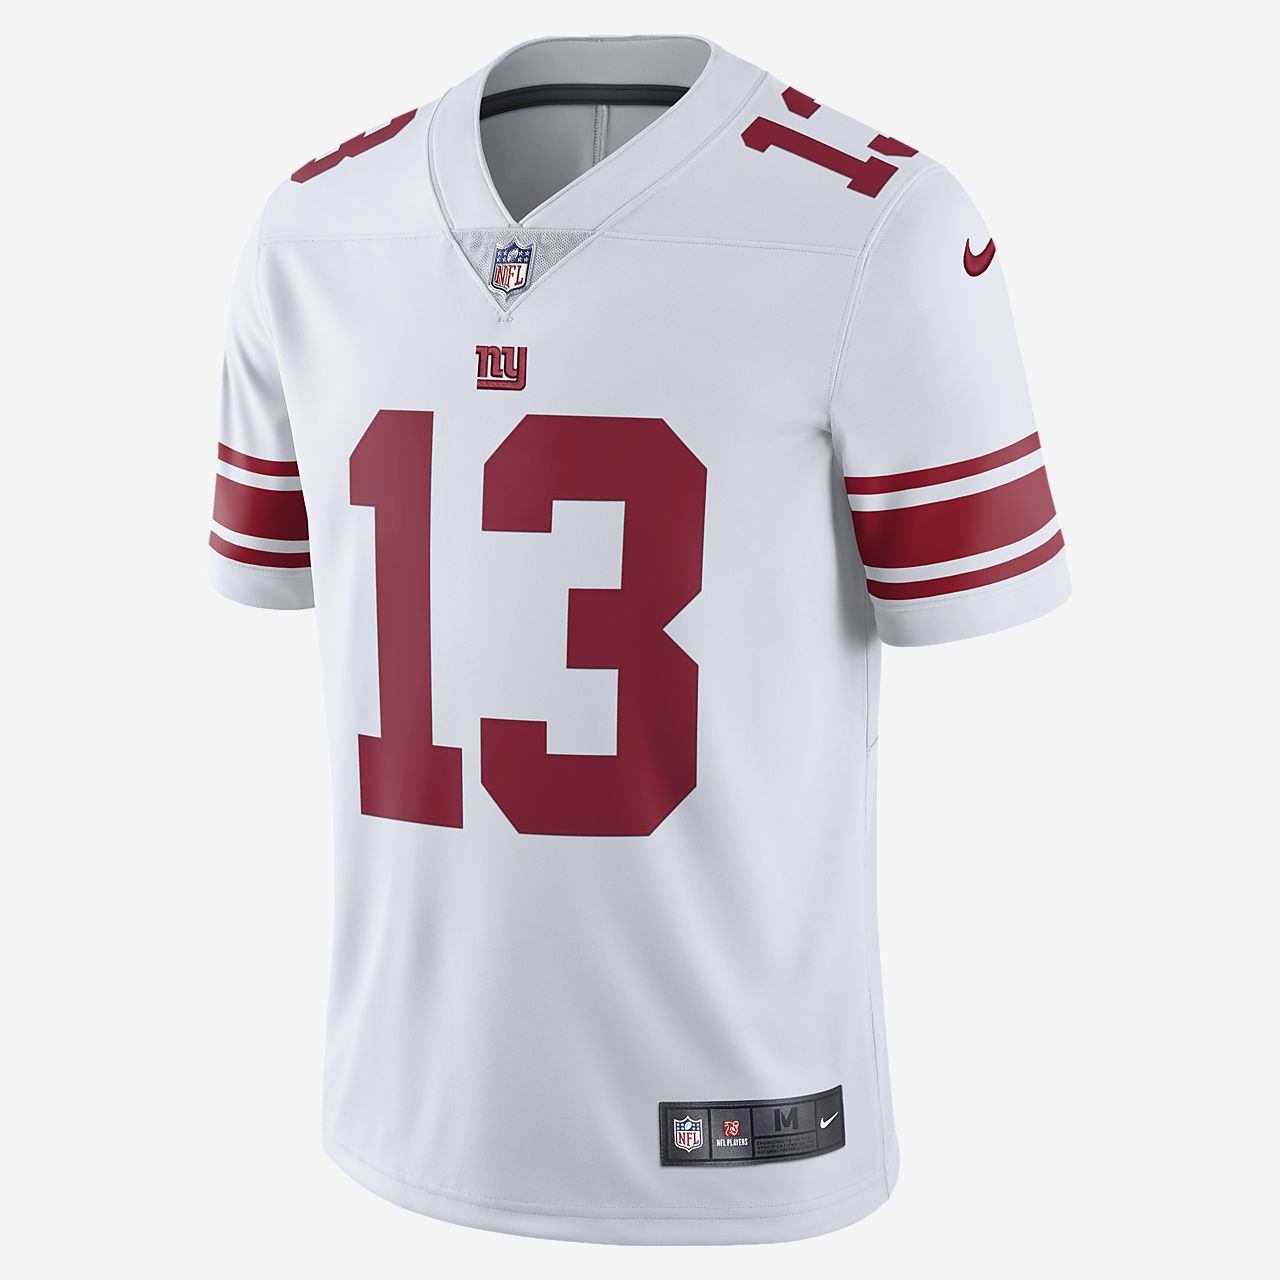 NFL New York Giants Limited (Odell Beckham Jr.) Men's Football Jersey. Nike.com